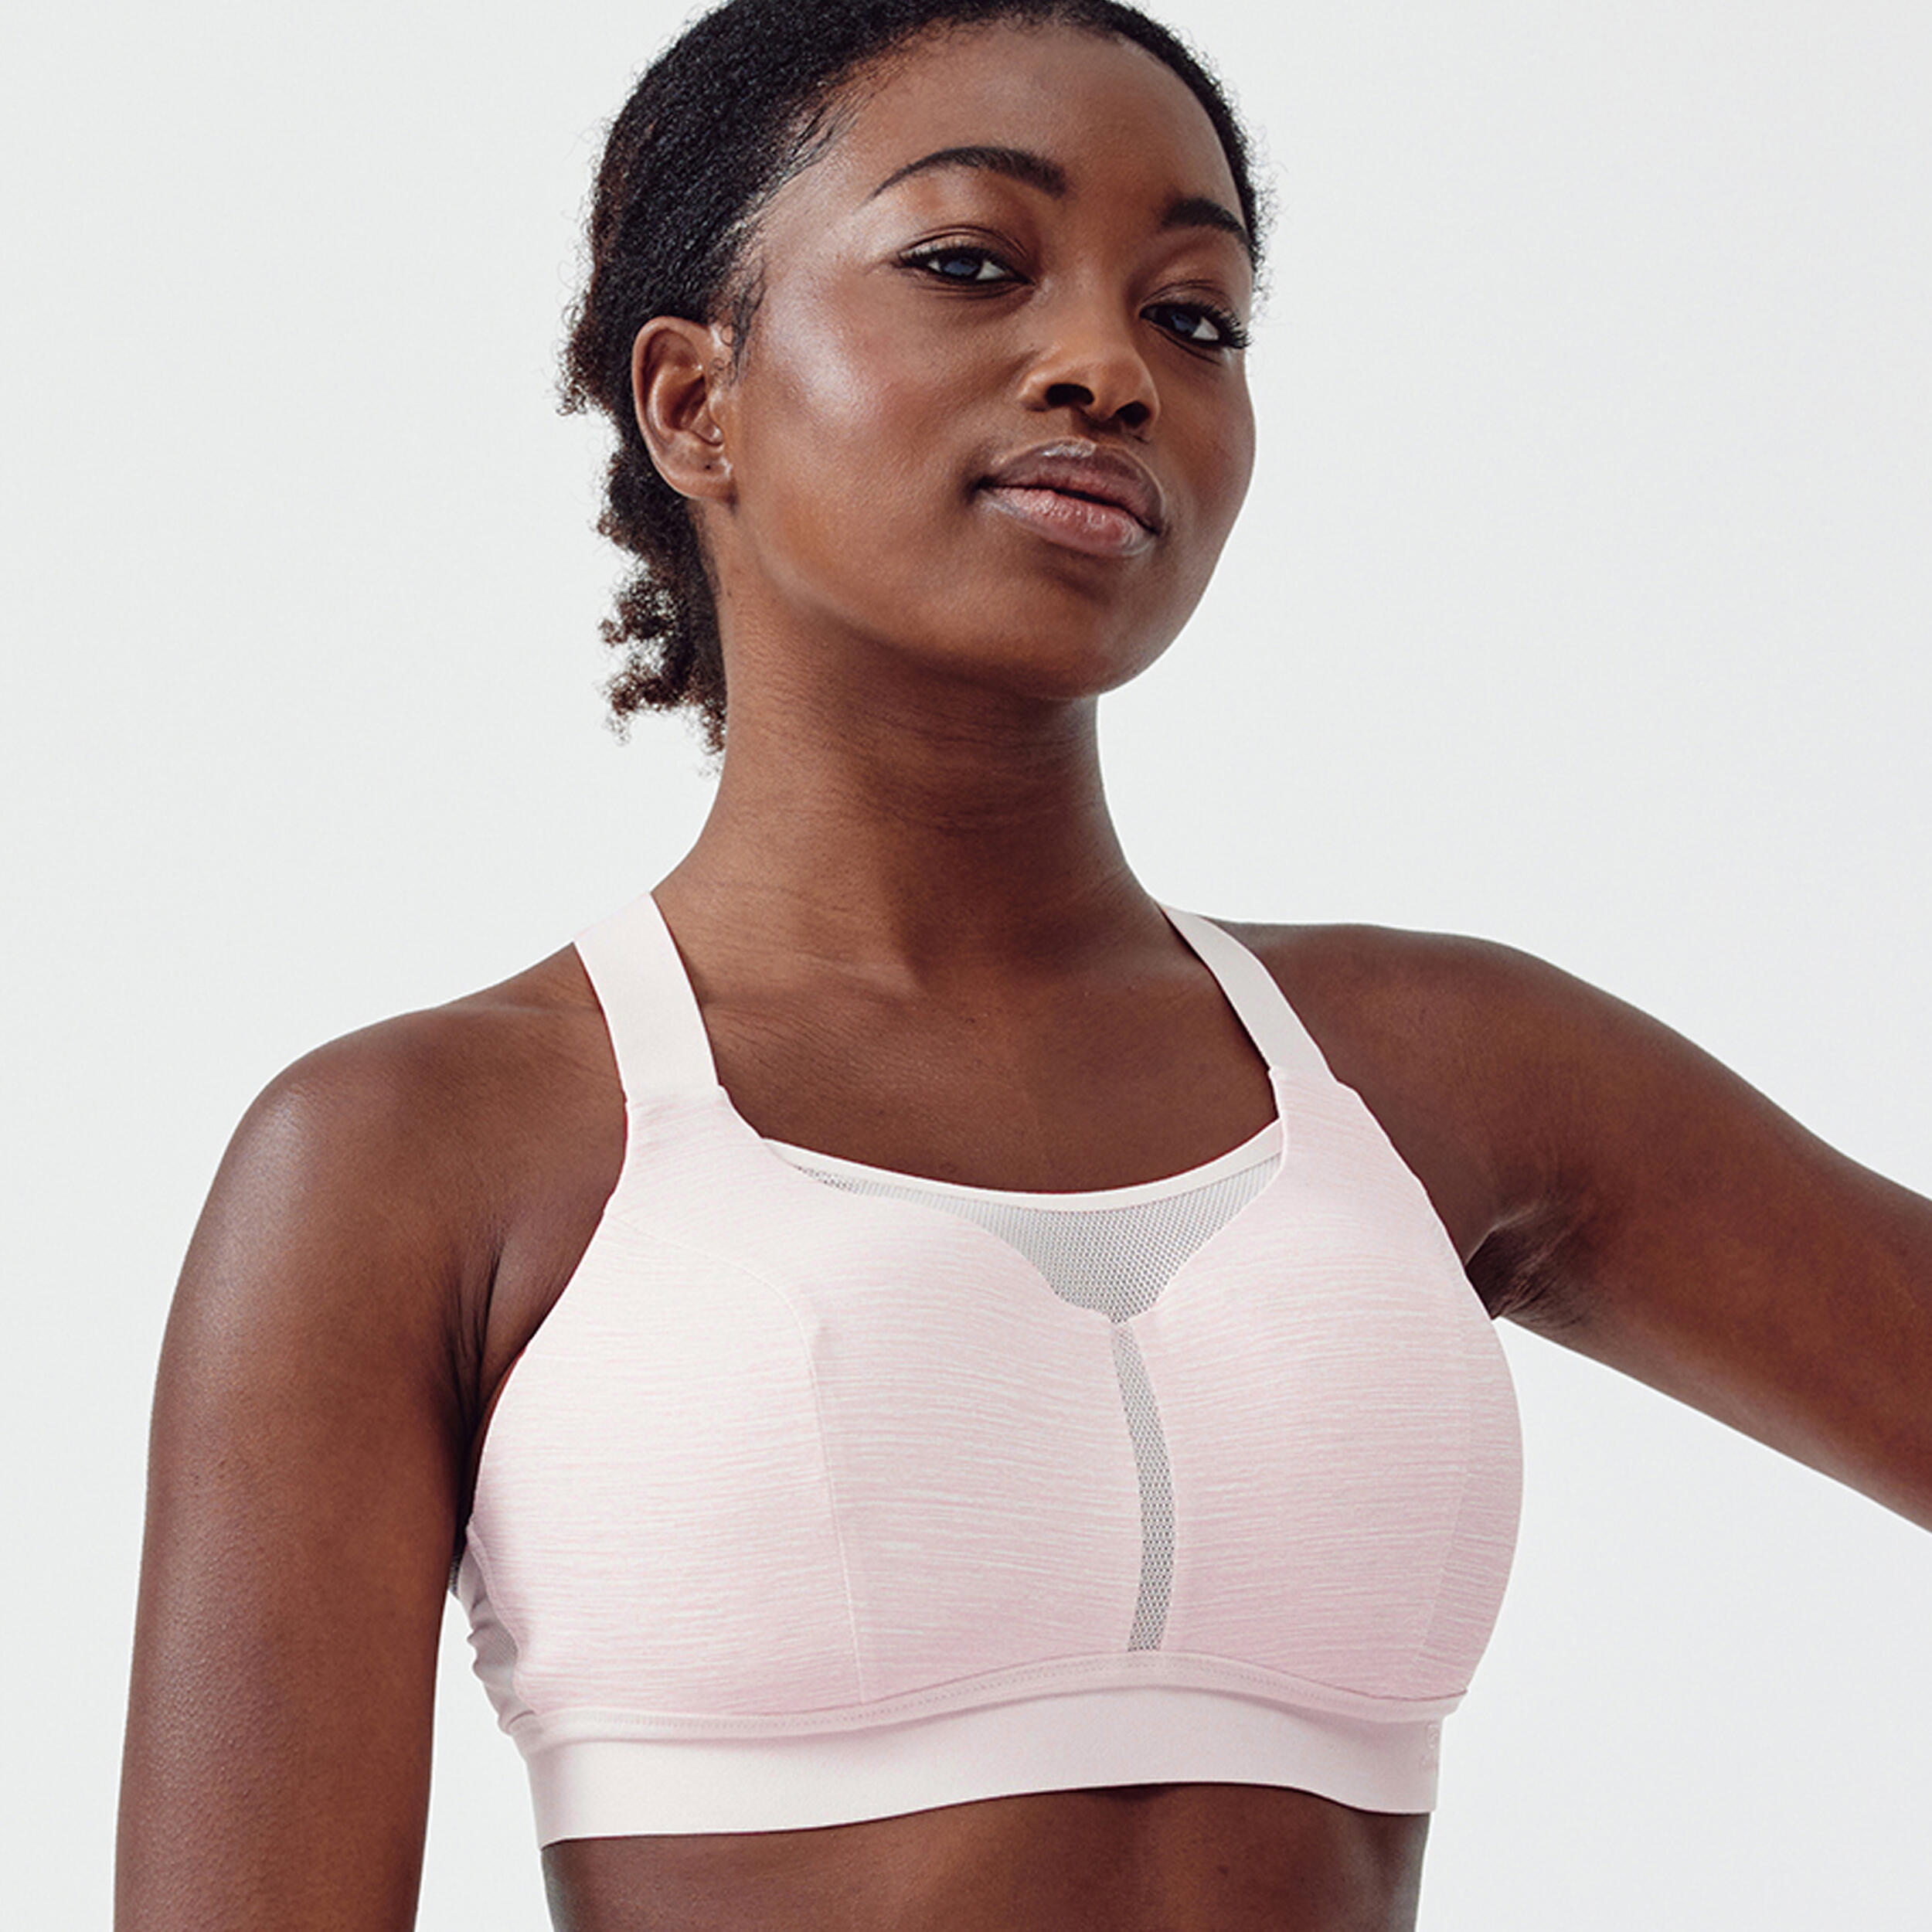 Decathlon Kalenji jogging comfort sports bra adjustable straps